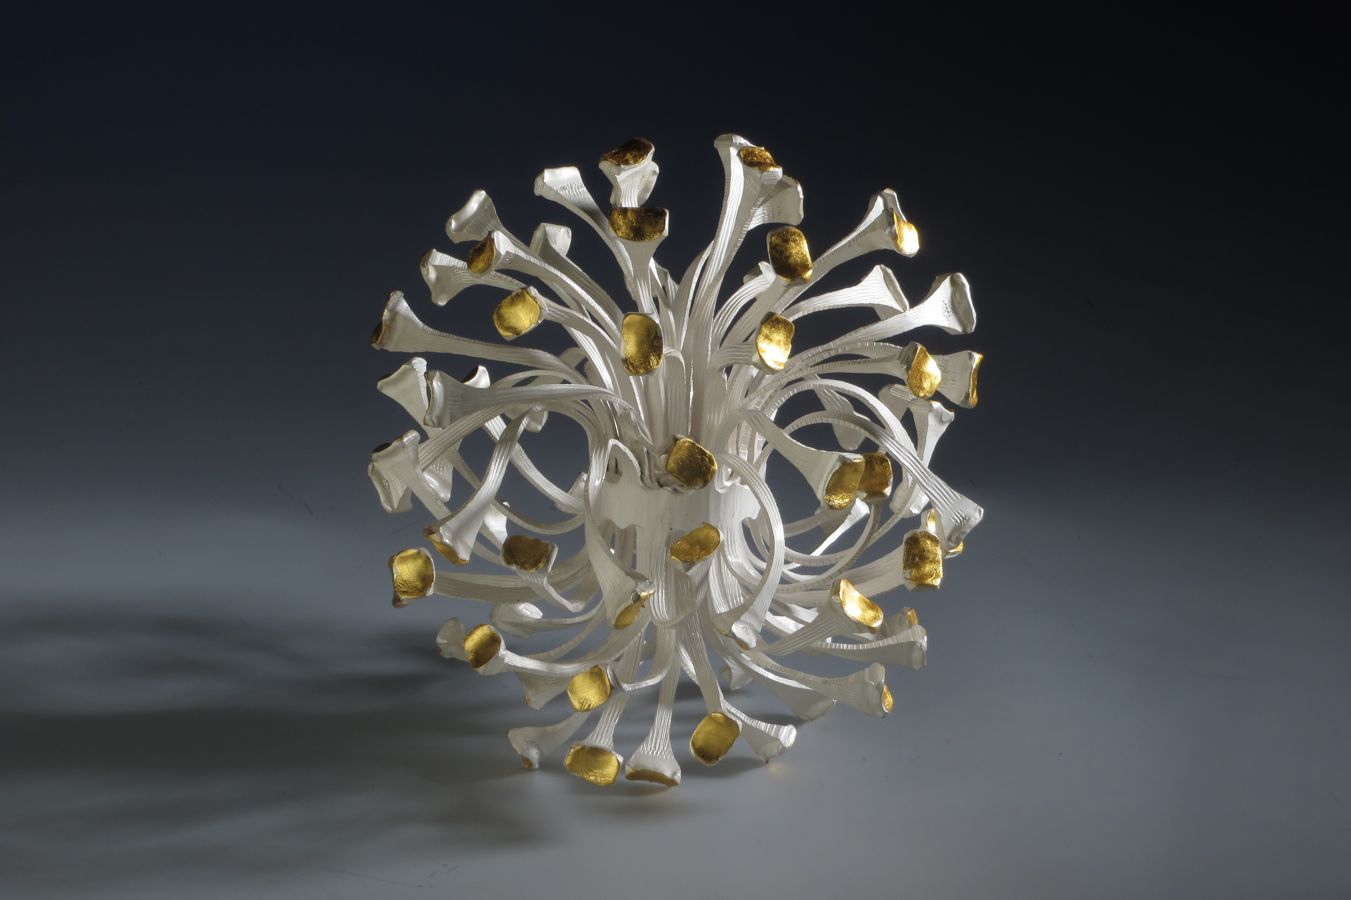 Piece -- materials: silver, gold leaf; dimensions: diameter 15.5 x 15 h cm;